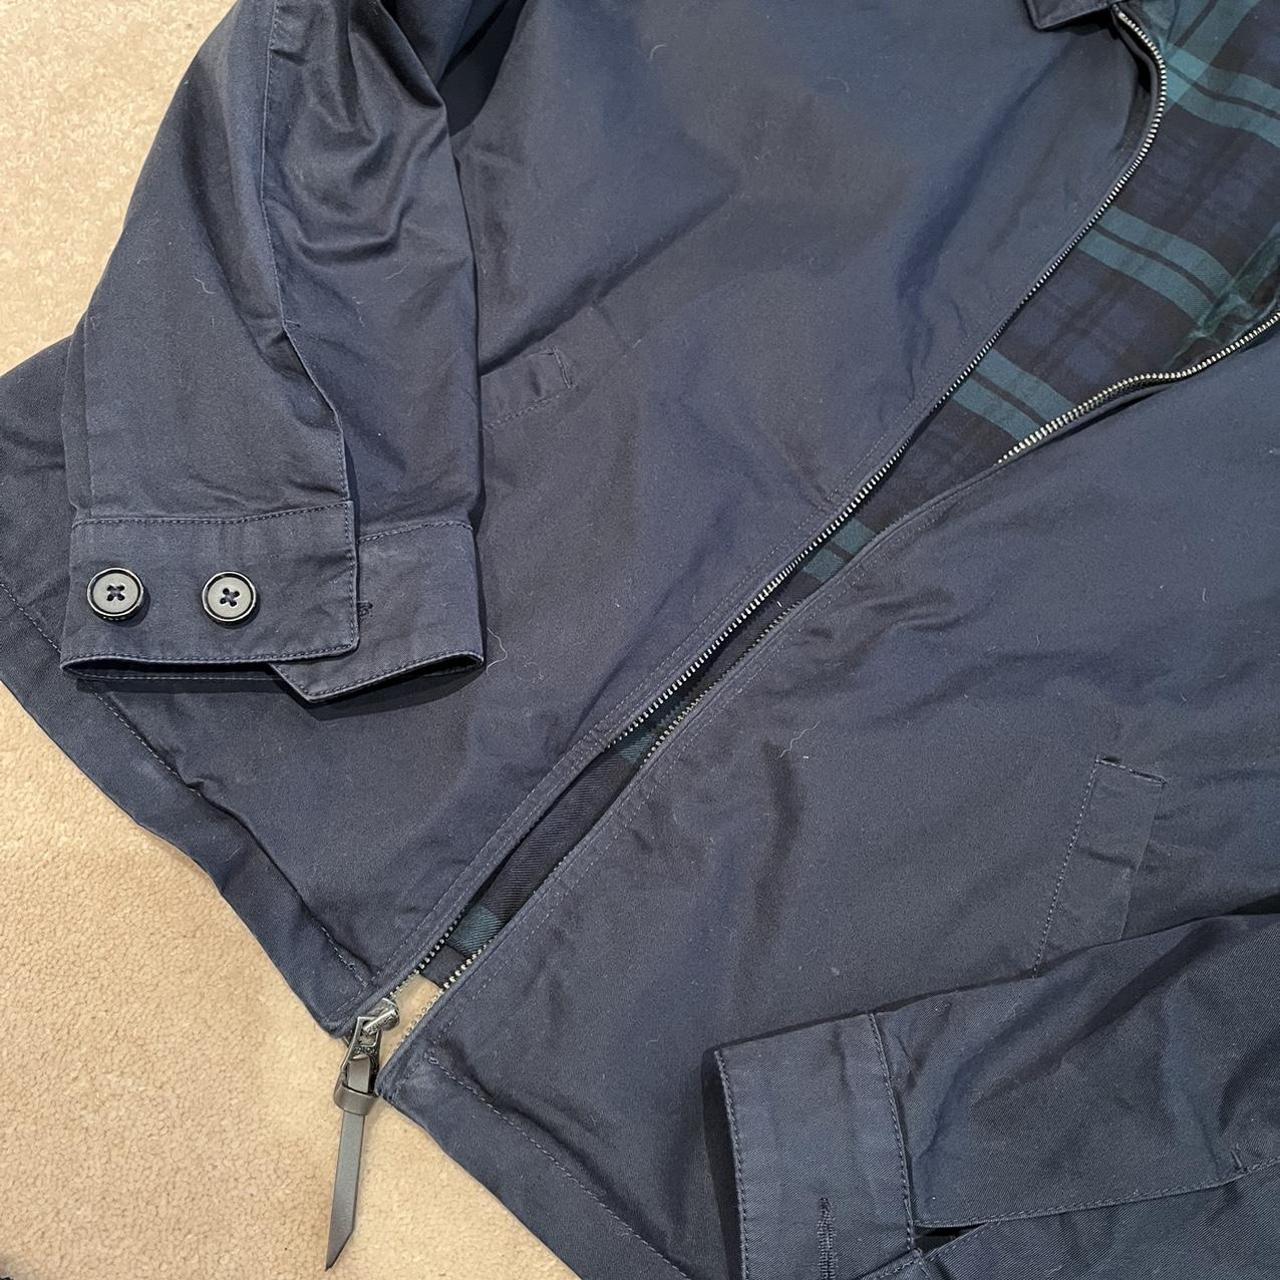 Barely worn Ralph Lauren jacket. Size: M (true to... - Depop